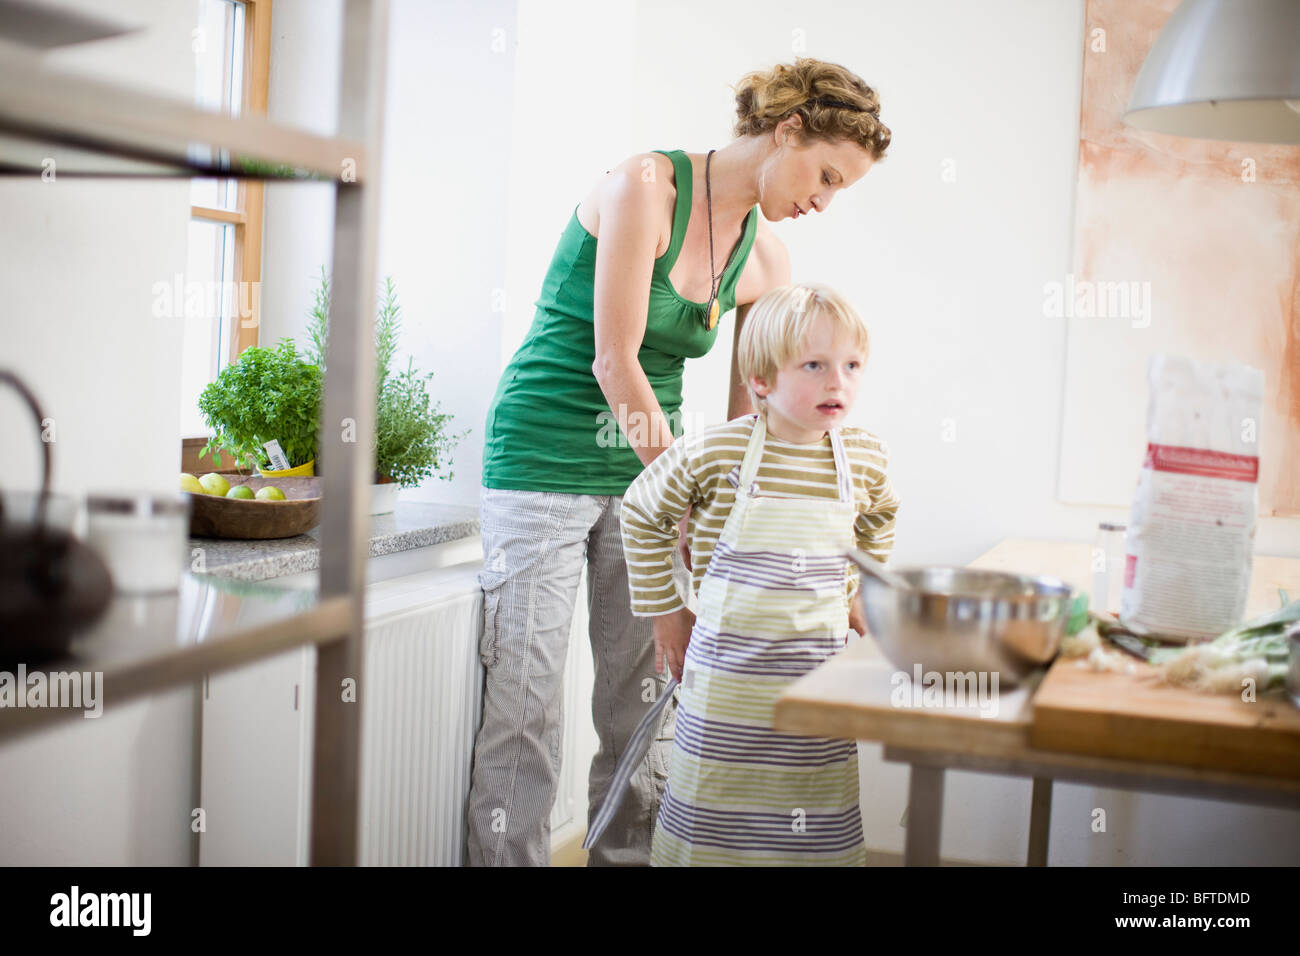 Где сын соблазняет маму. Кухня и сын. Фотосессия мама с сыном на кухне. Русская мама на кухне сын.